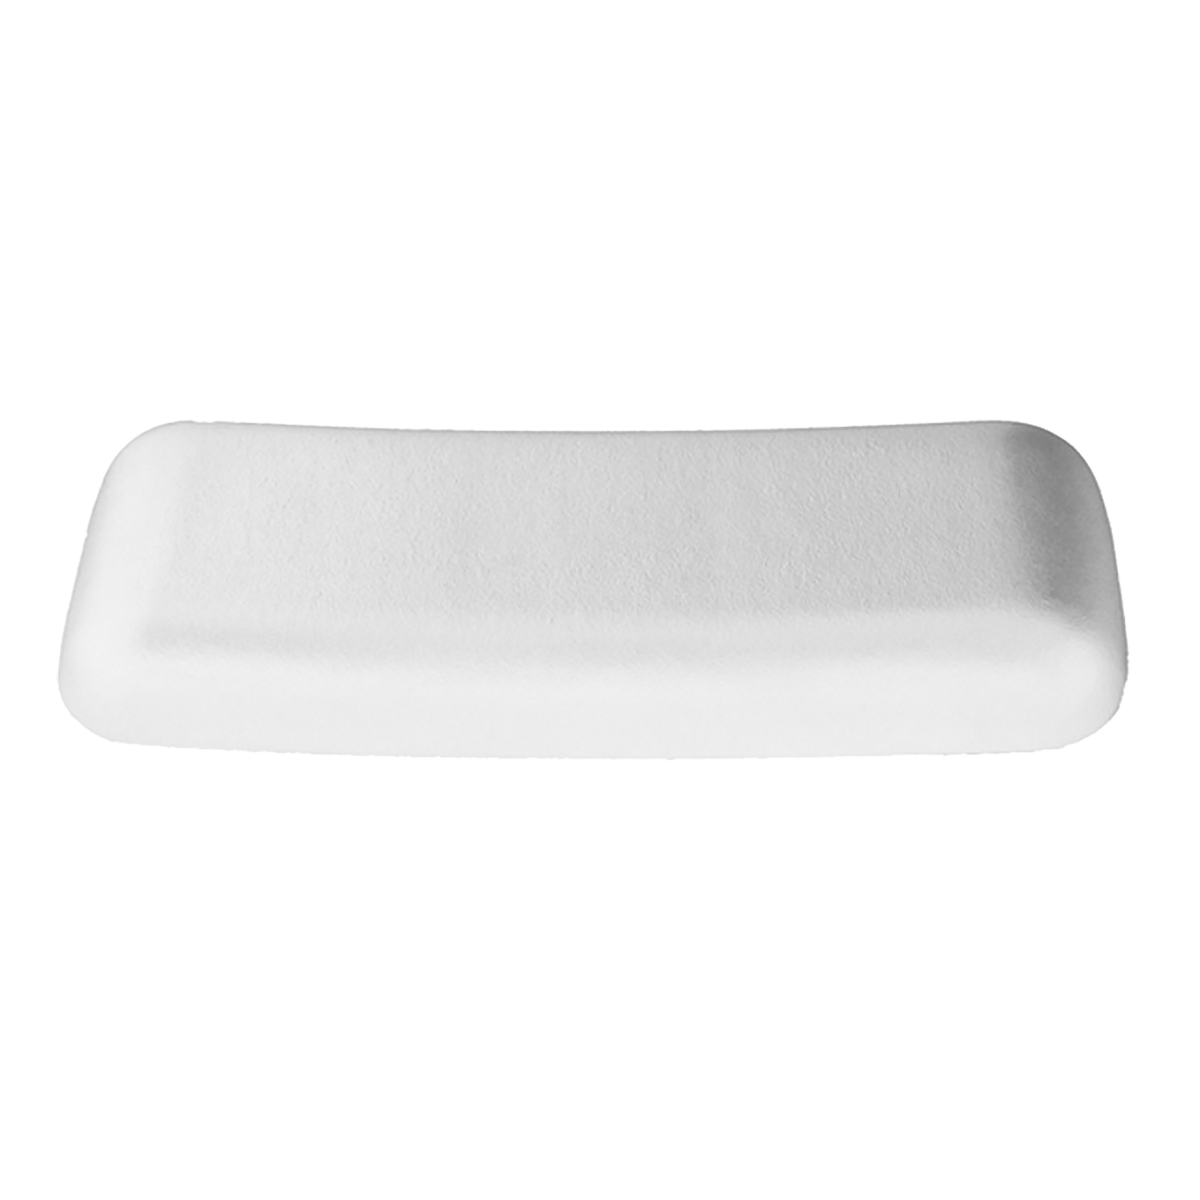 подголовник белый для ванны Bette B57-0211